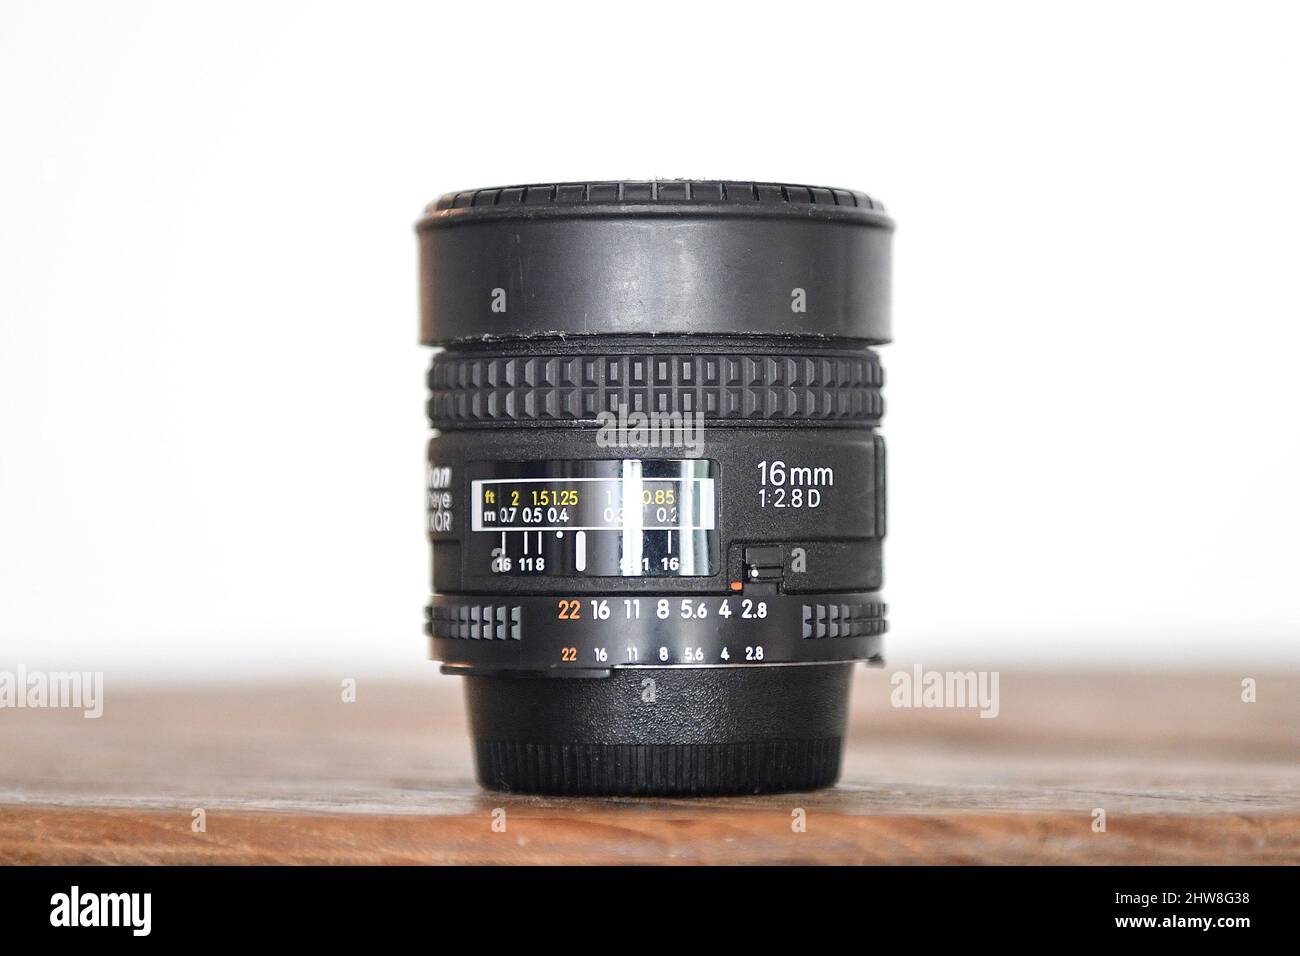 Nikon 16mm fisheye camera lens slr hi-res stock photography and images -  Alamy